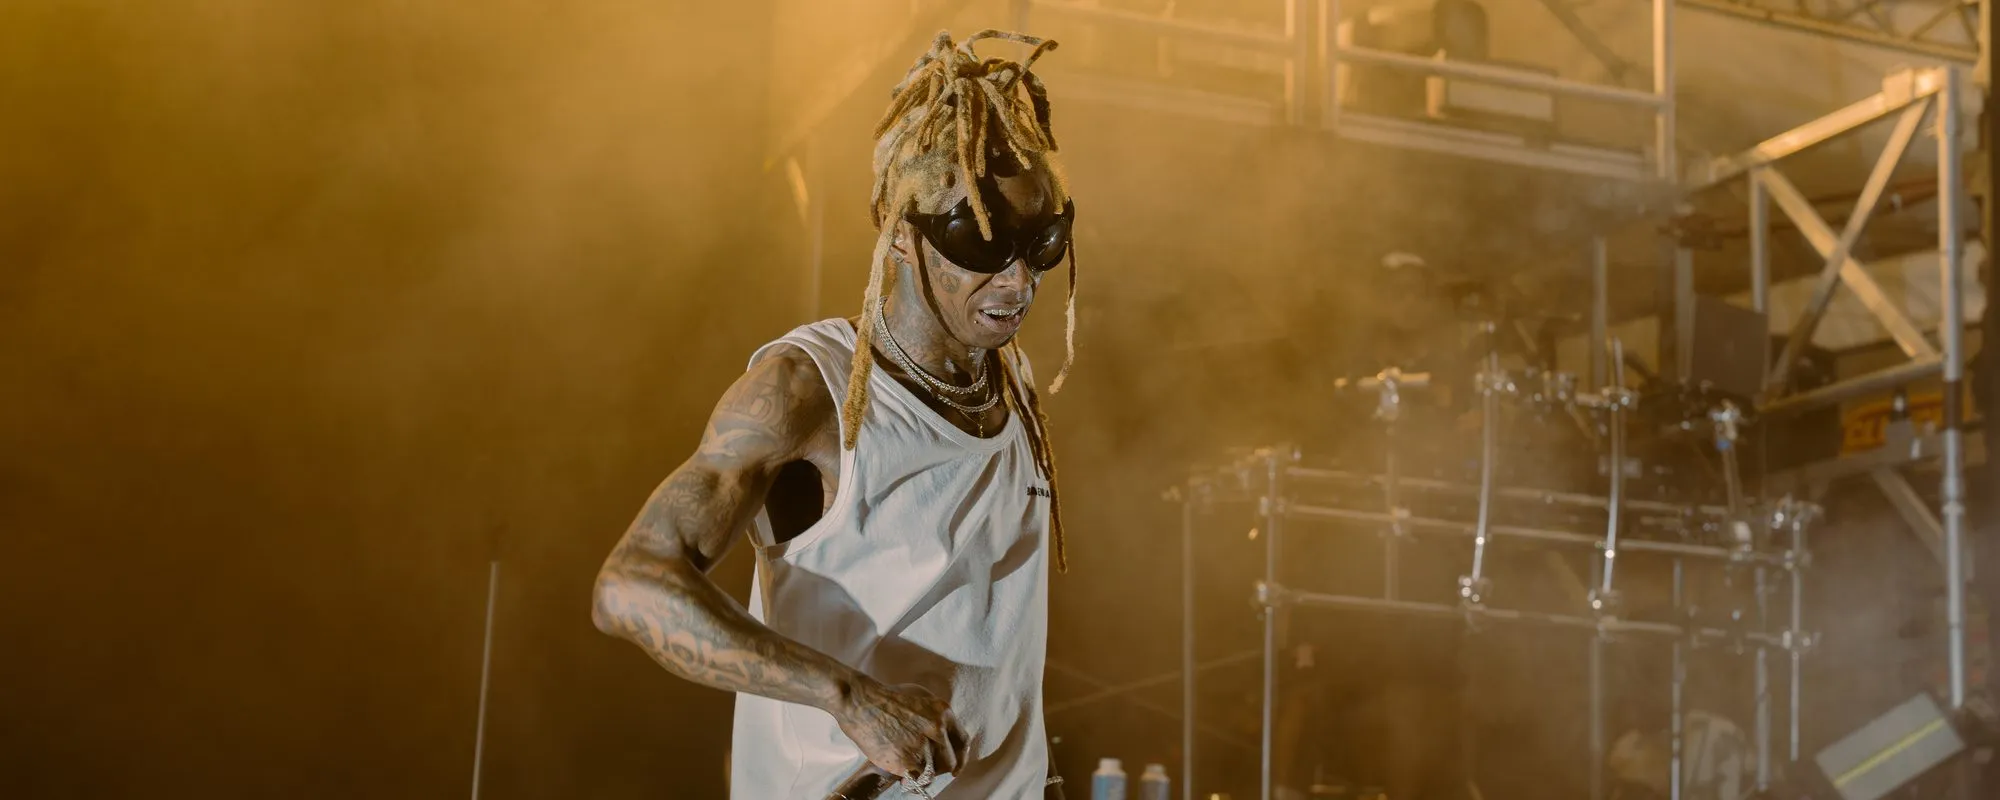 Run-DMC, Snoop Dogg, Lil Wayne Set to Headline Hip-Hop 50 Live Festival